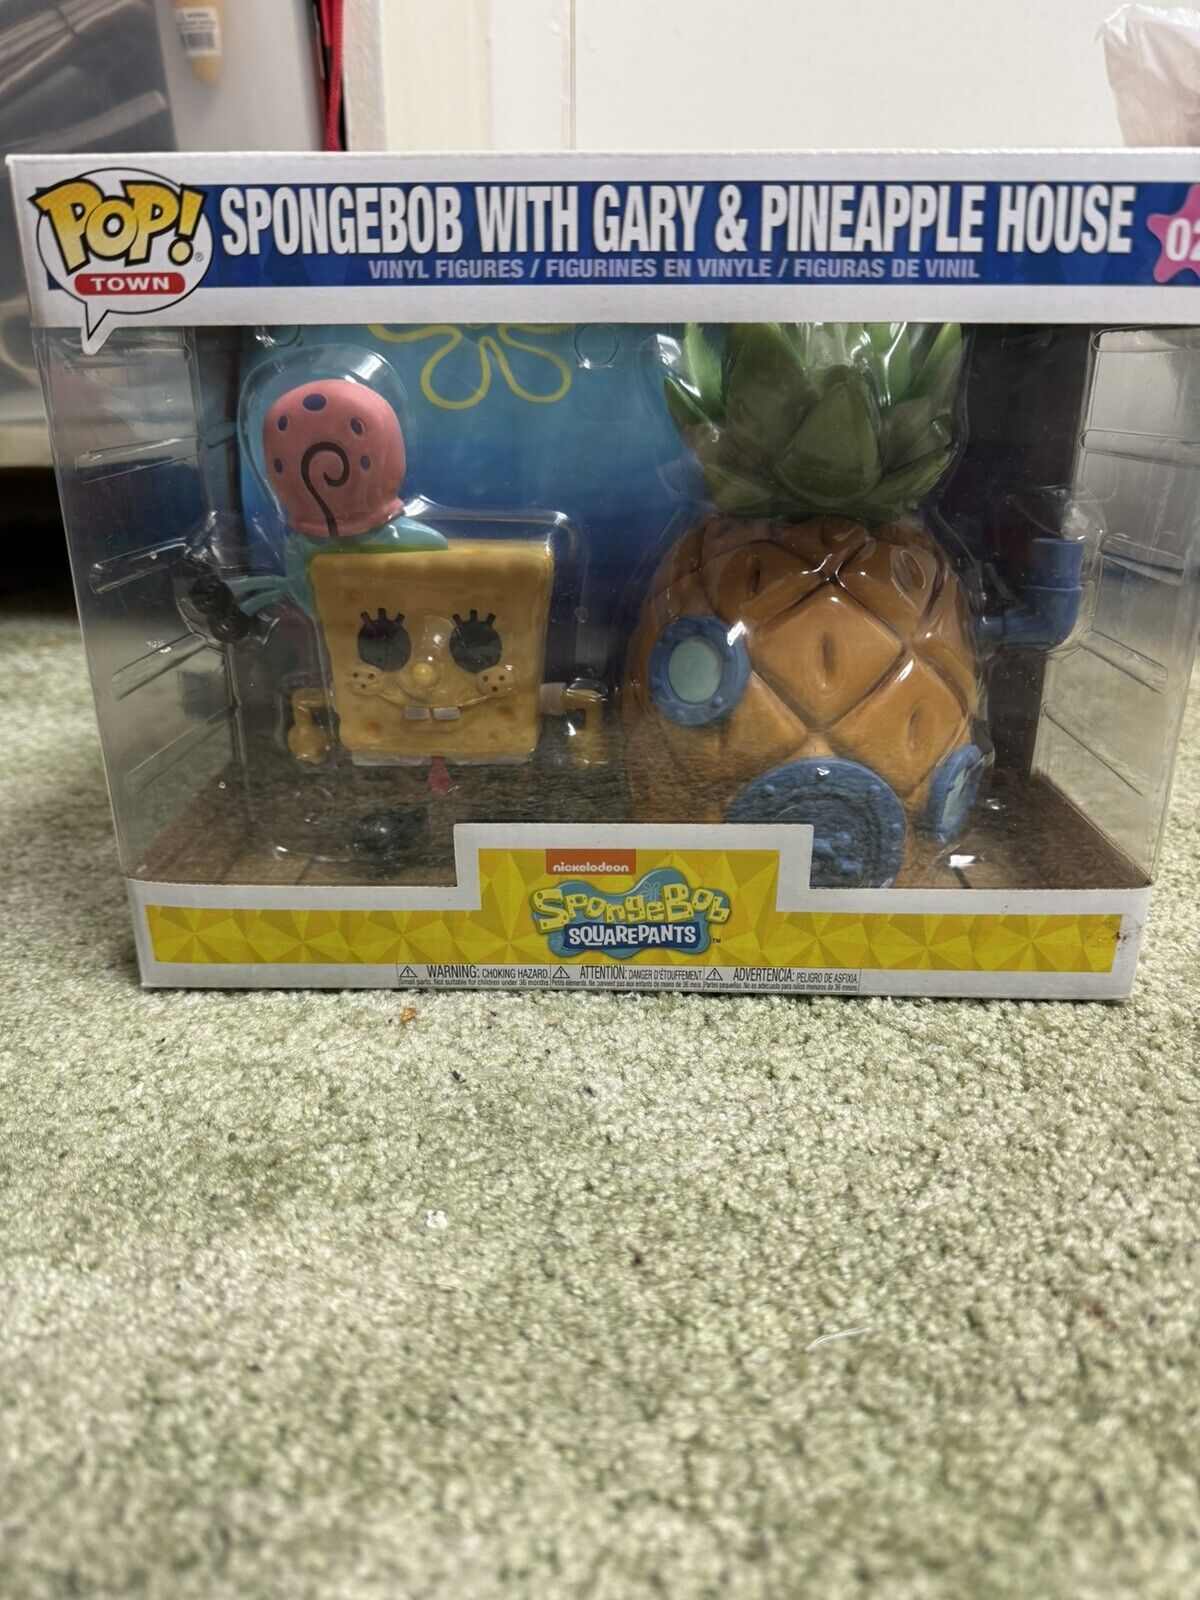 02 SpongeBob SquarePants, SpongeBob With Gary and Pineapple House